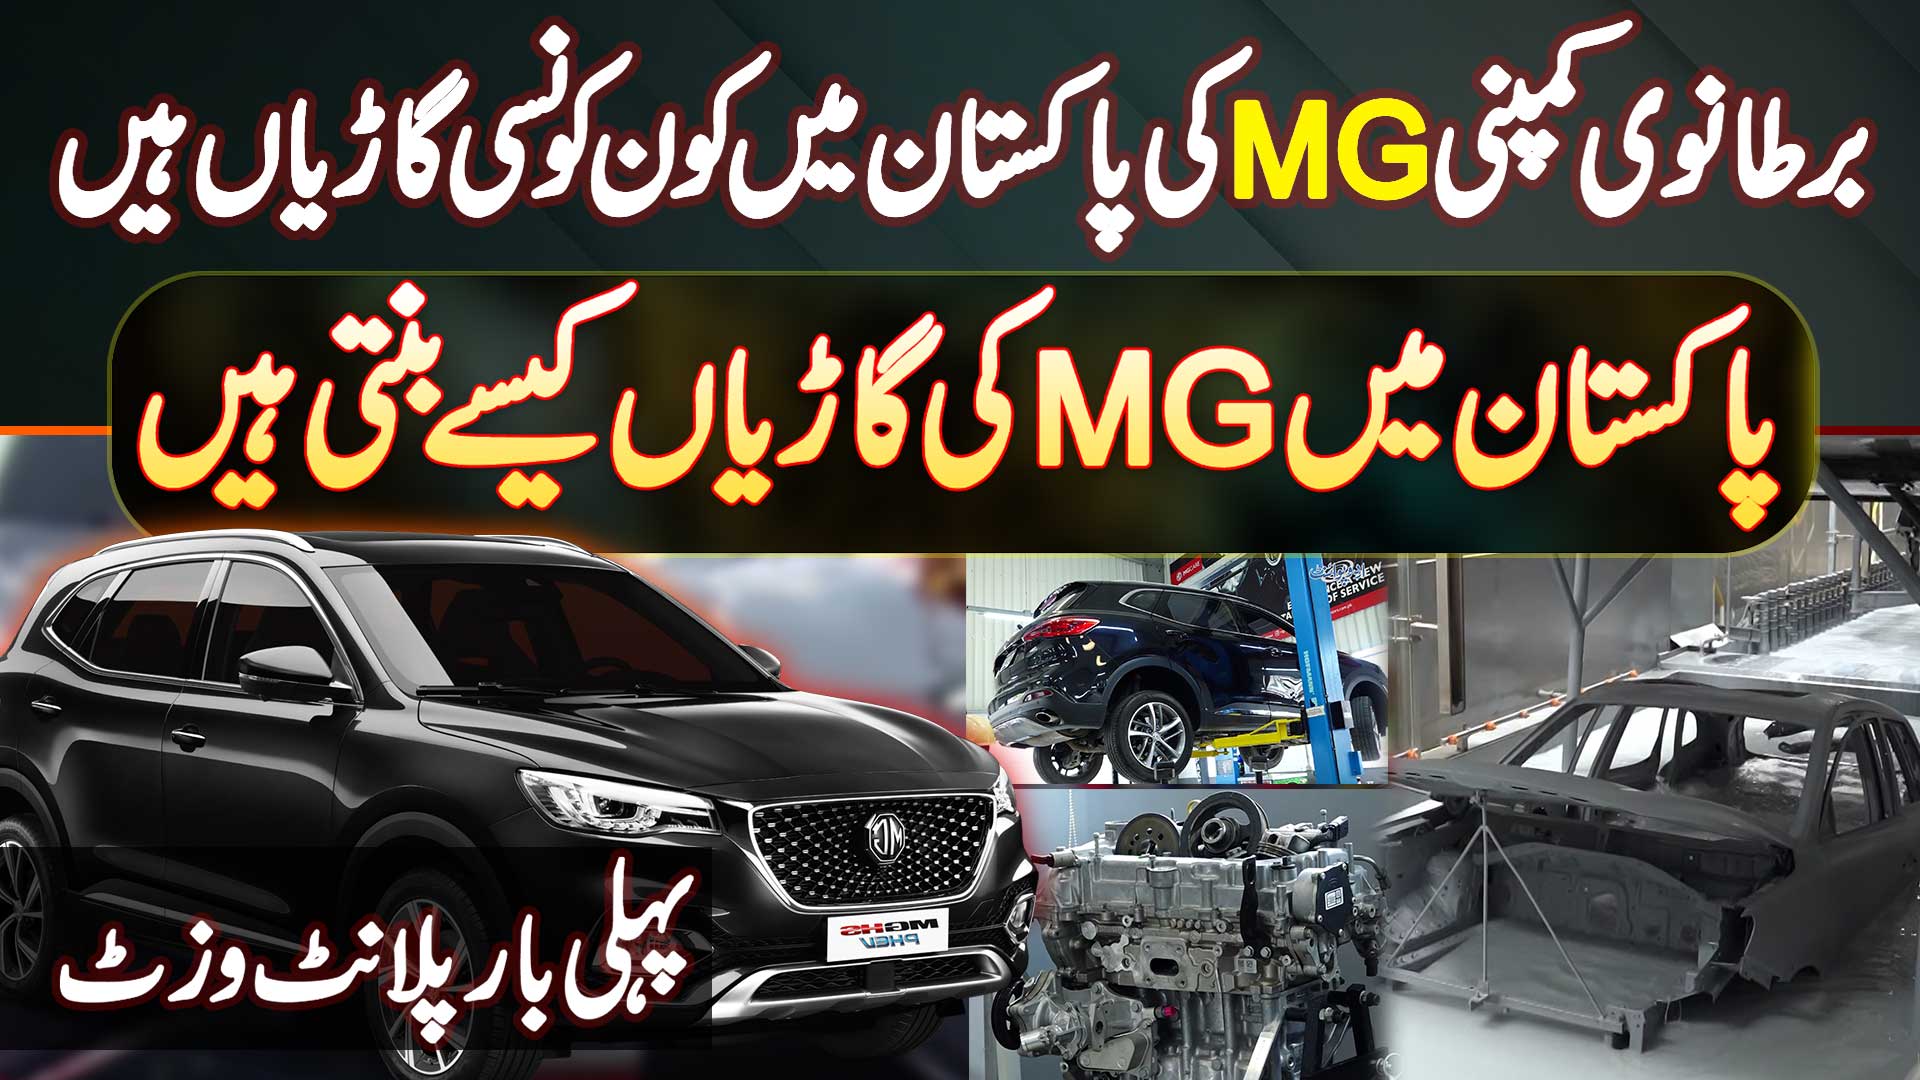 MG Ki Pakistan Me Kon Konsi Cars Hain – Pakistan Me MG Cars Kaise Banti Hain? Exclusive Plant Visit